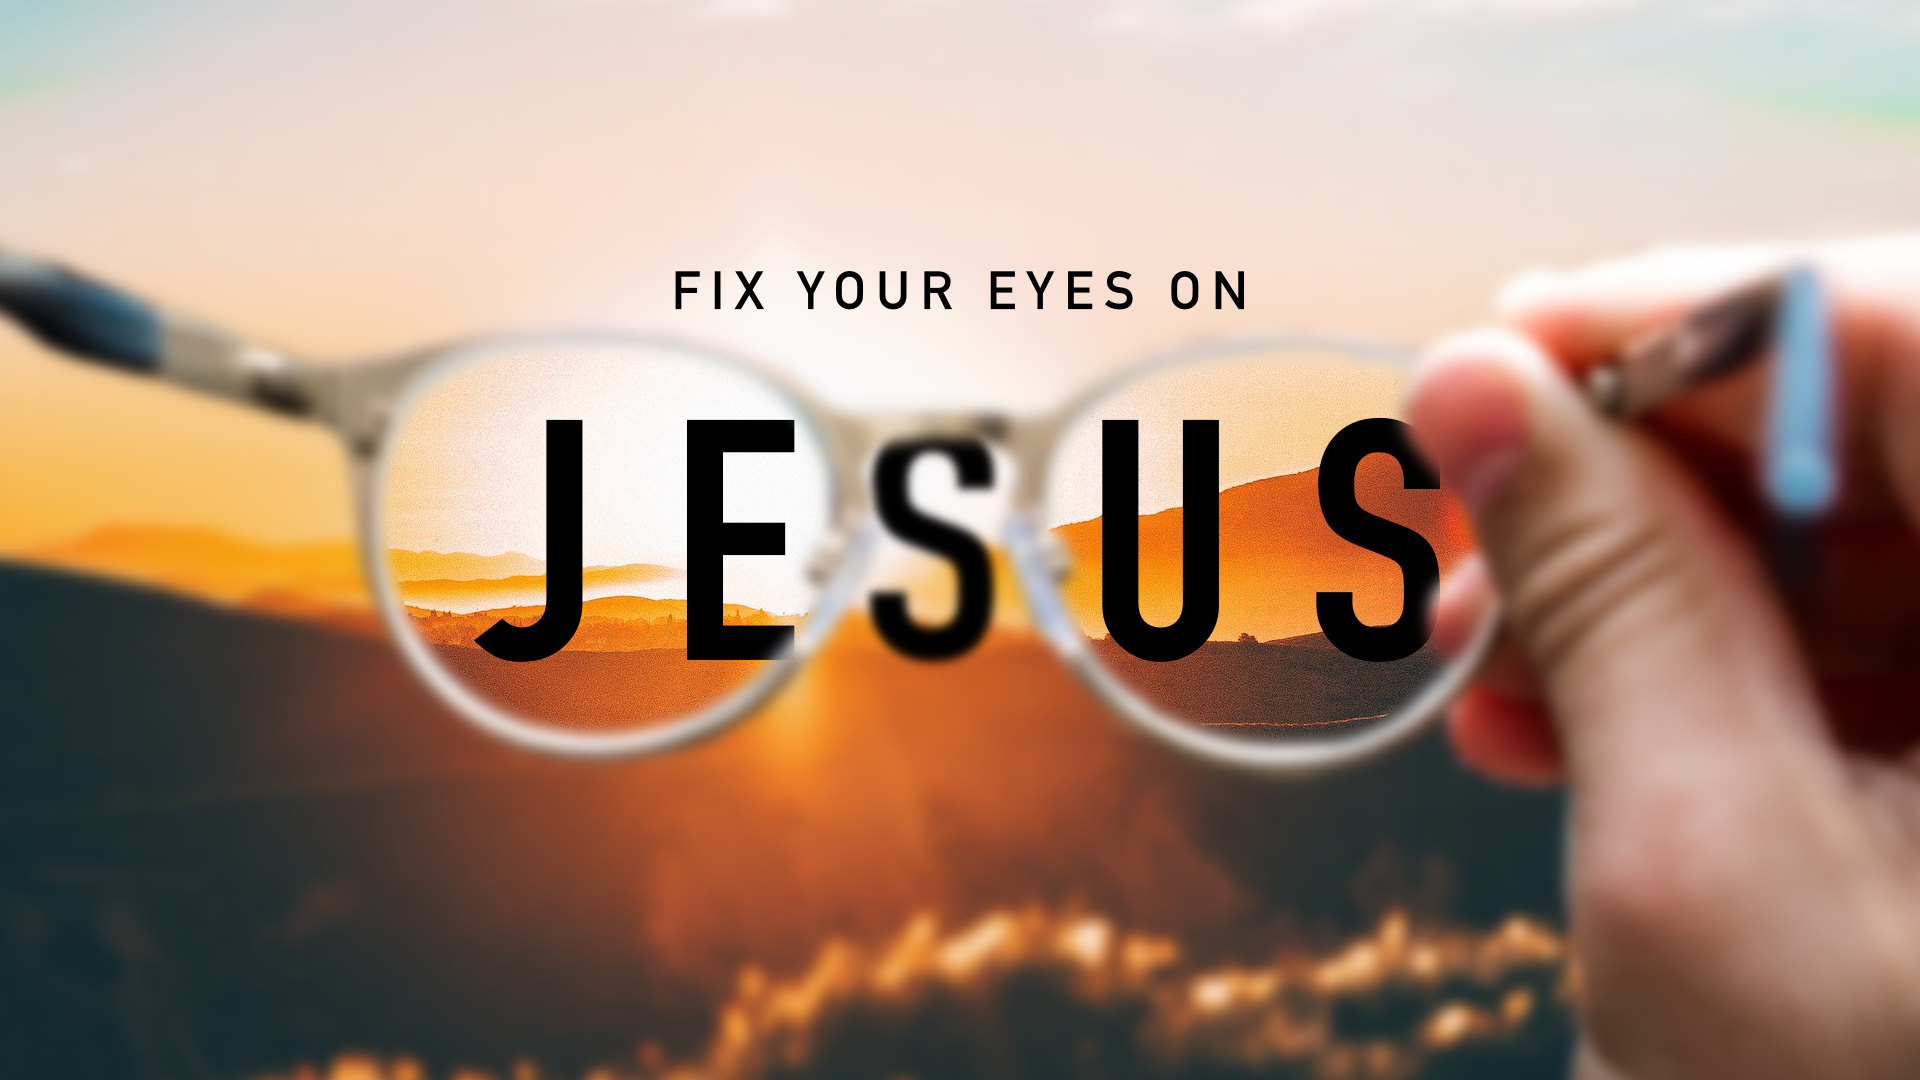 Focusing On Jesus